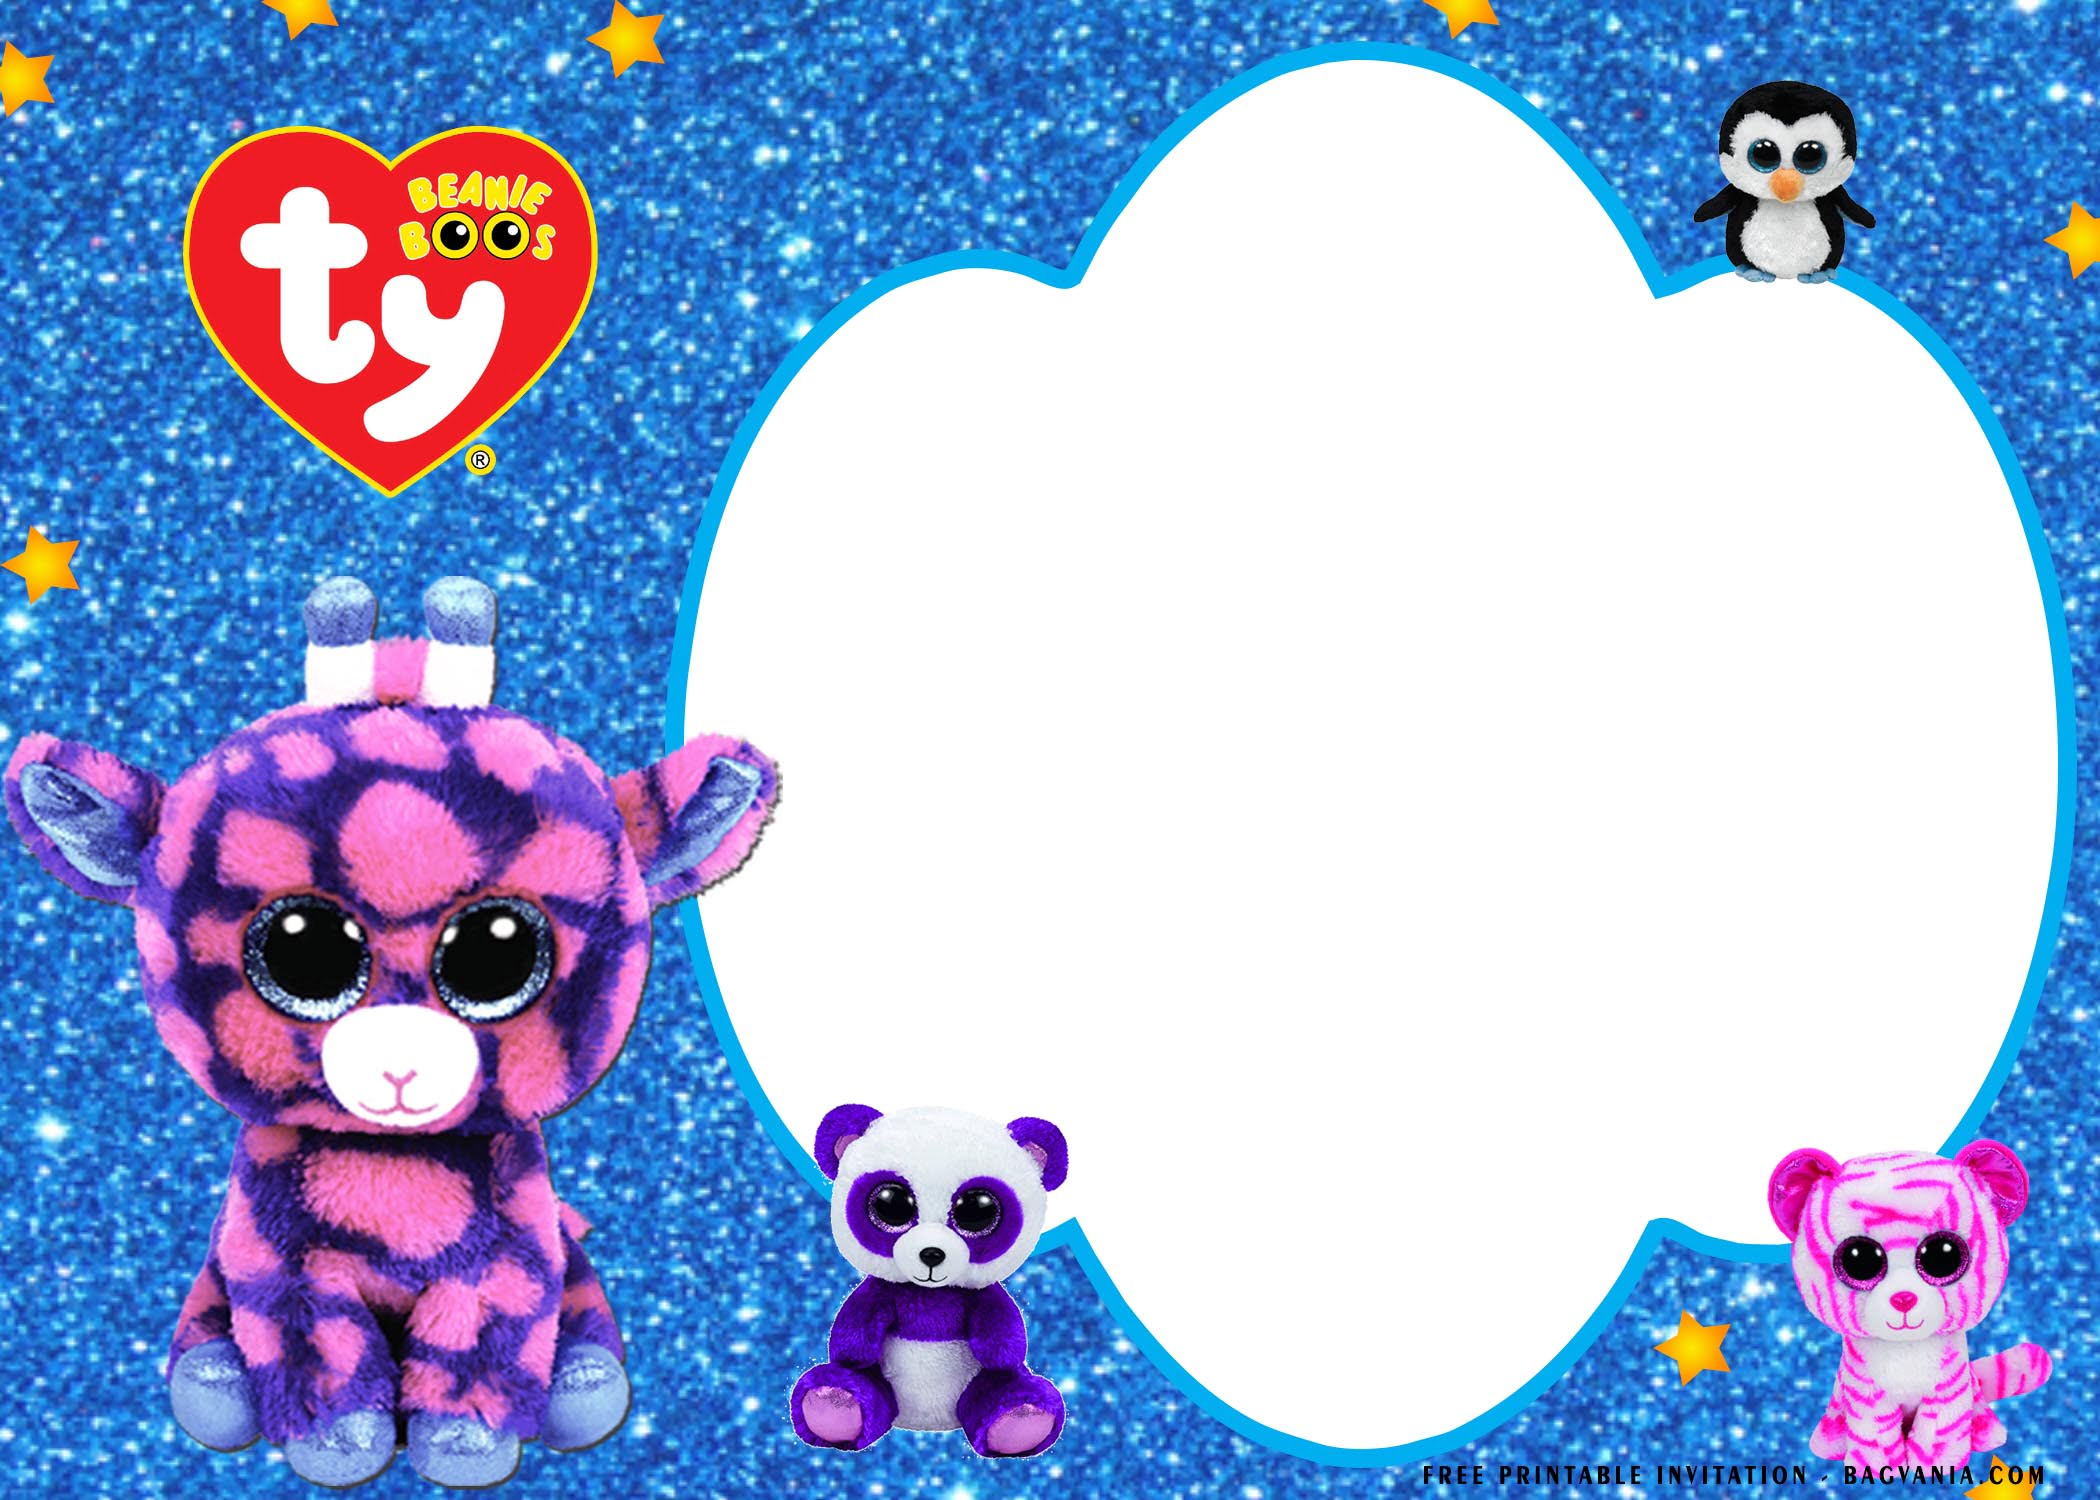 Download (FREE Printable) - Fluffy Beanie Boo Birthday Invitation ...